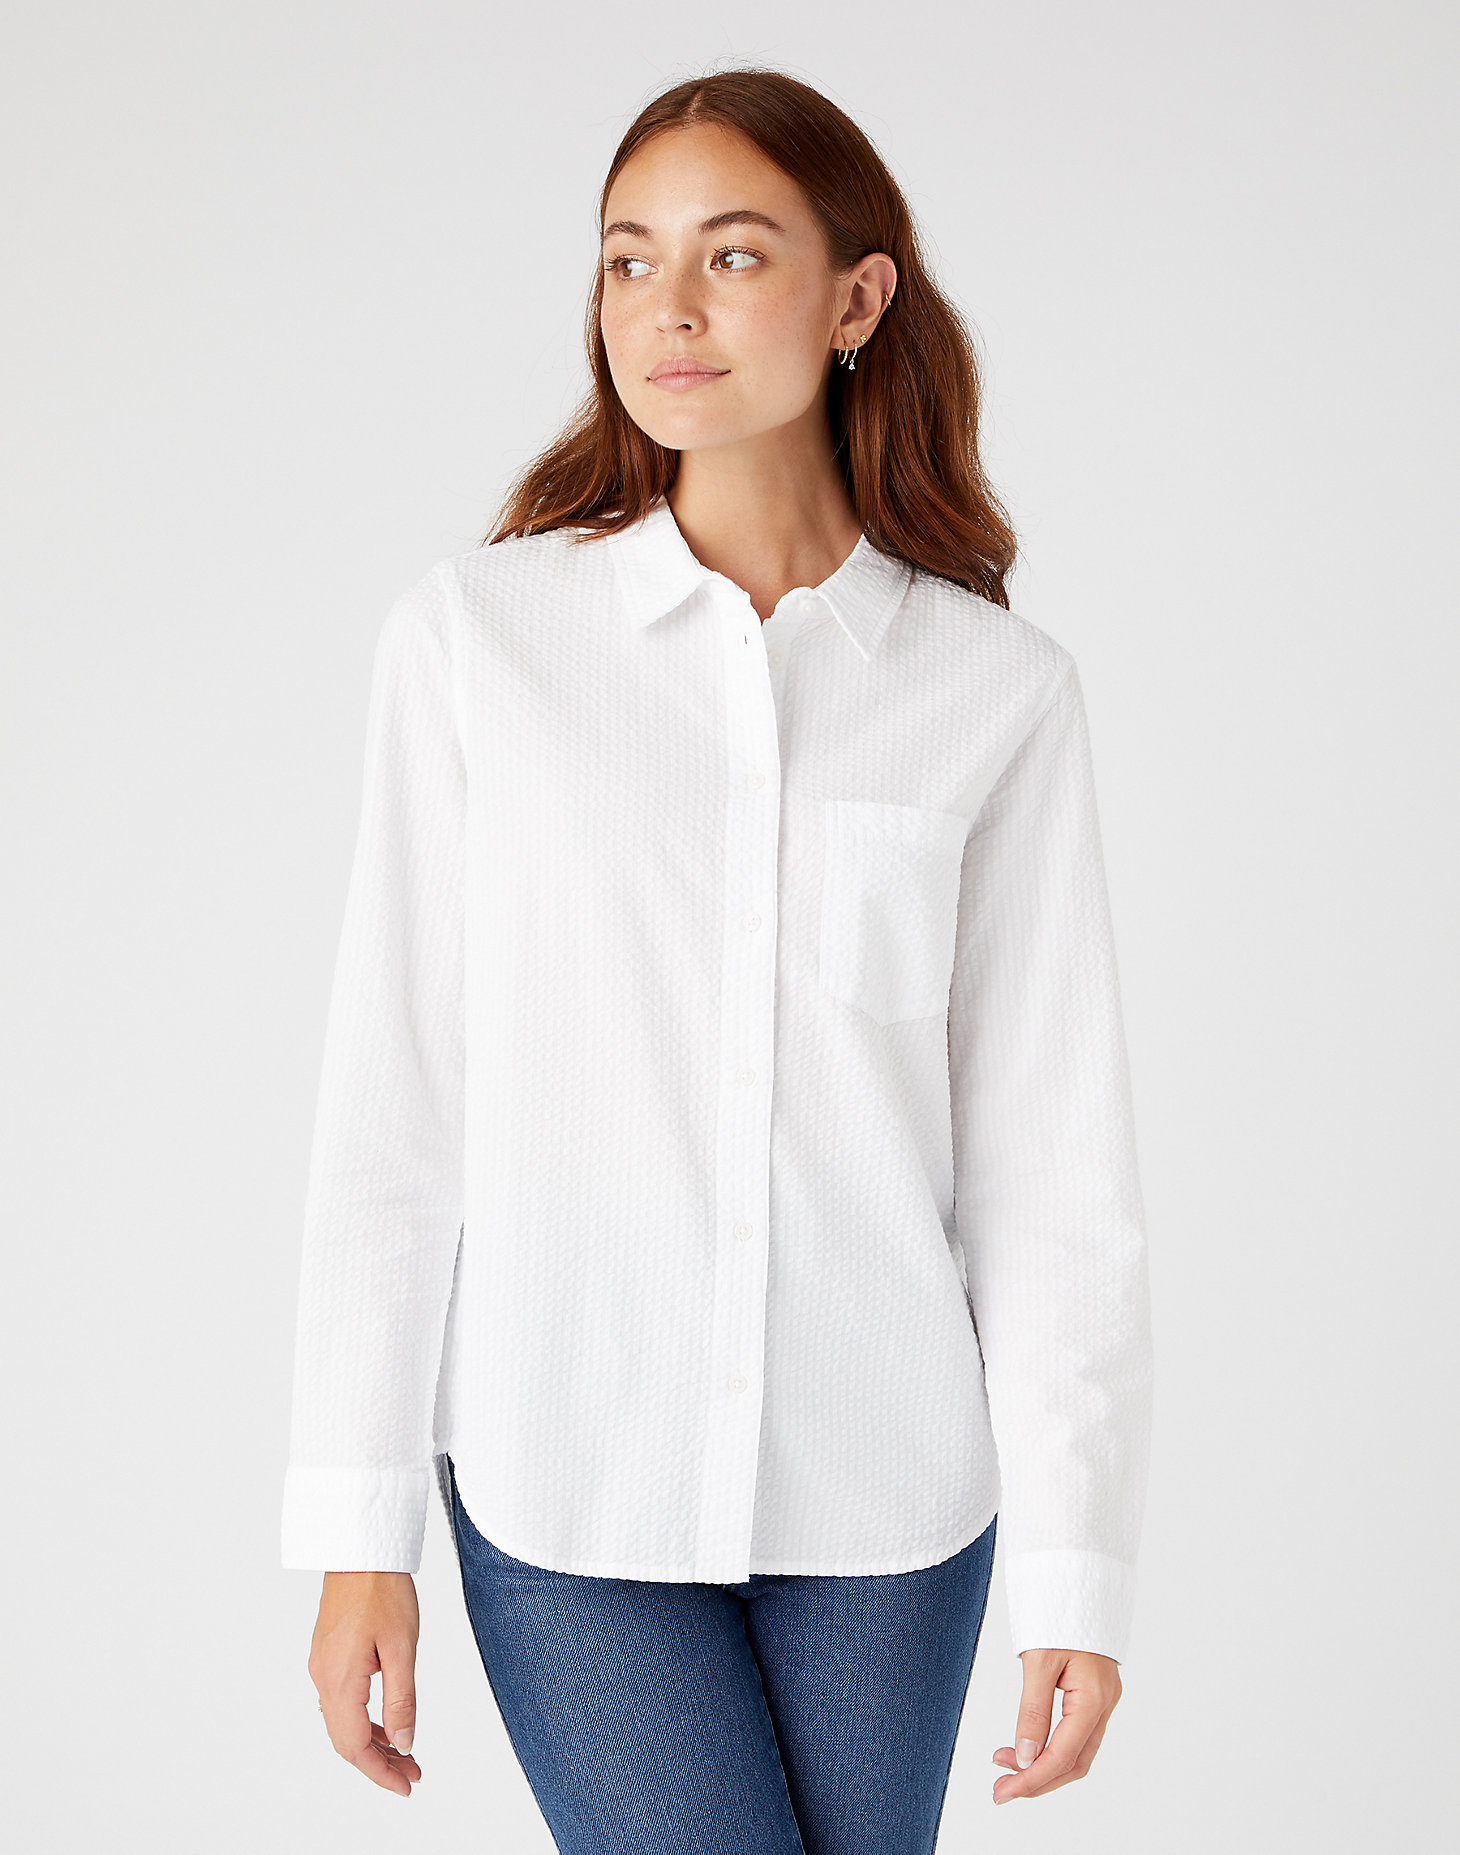 One Pocket Shirt in White alternative view 1